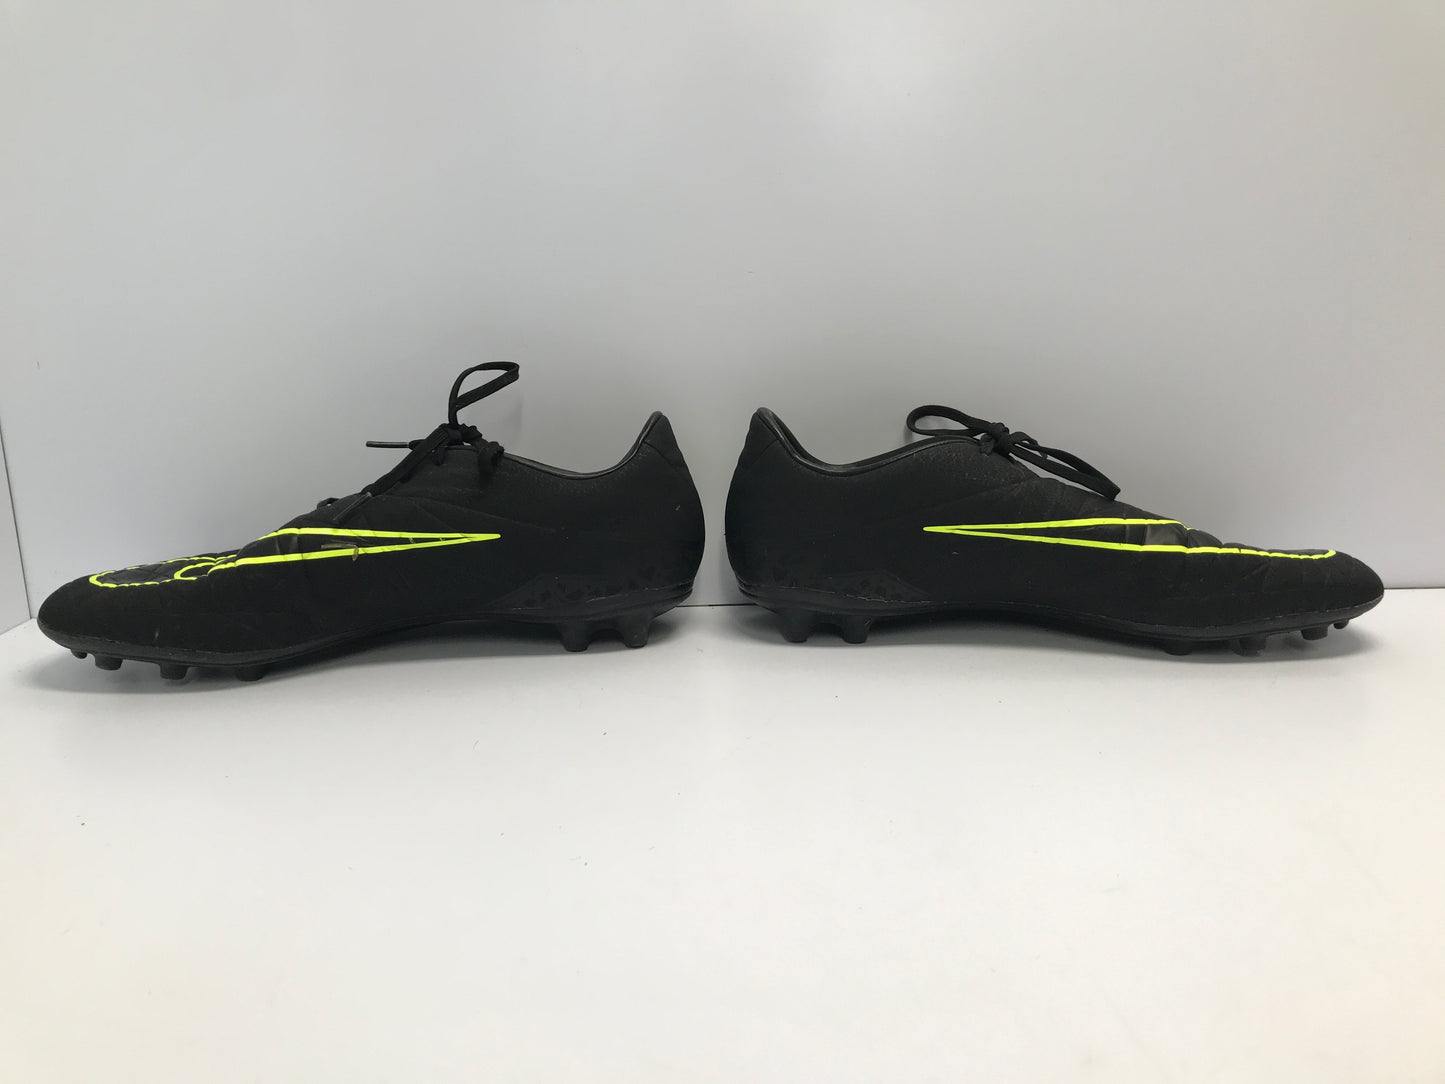 Soccer Shoes Cleats Men's Size 13 Nike Black Lime Excellent